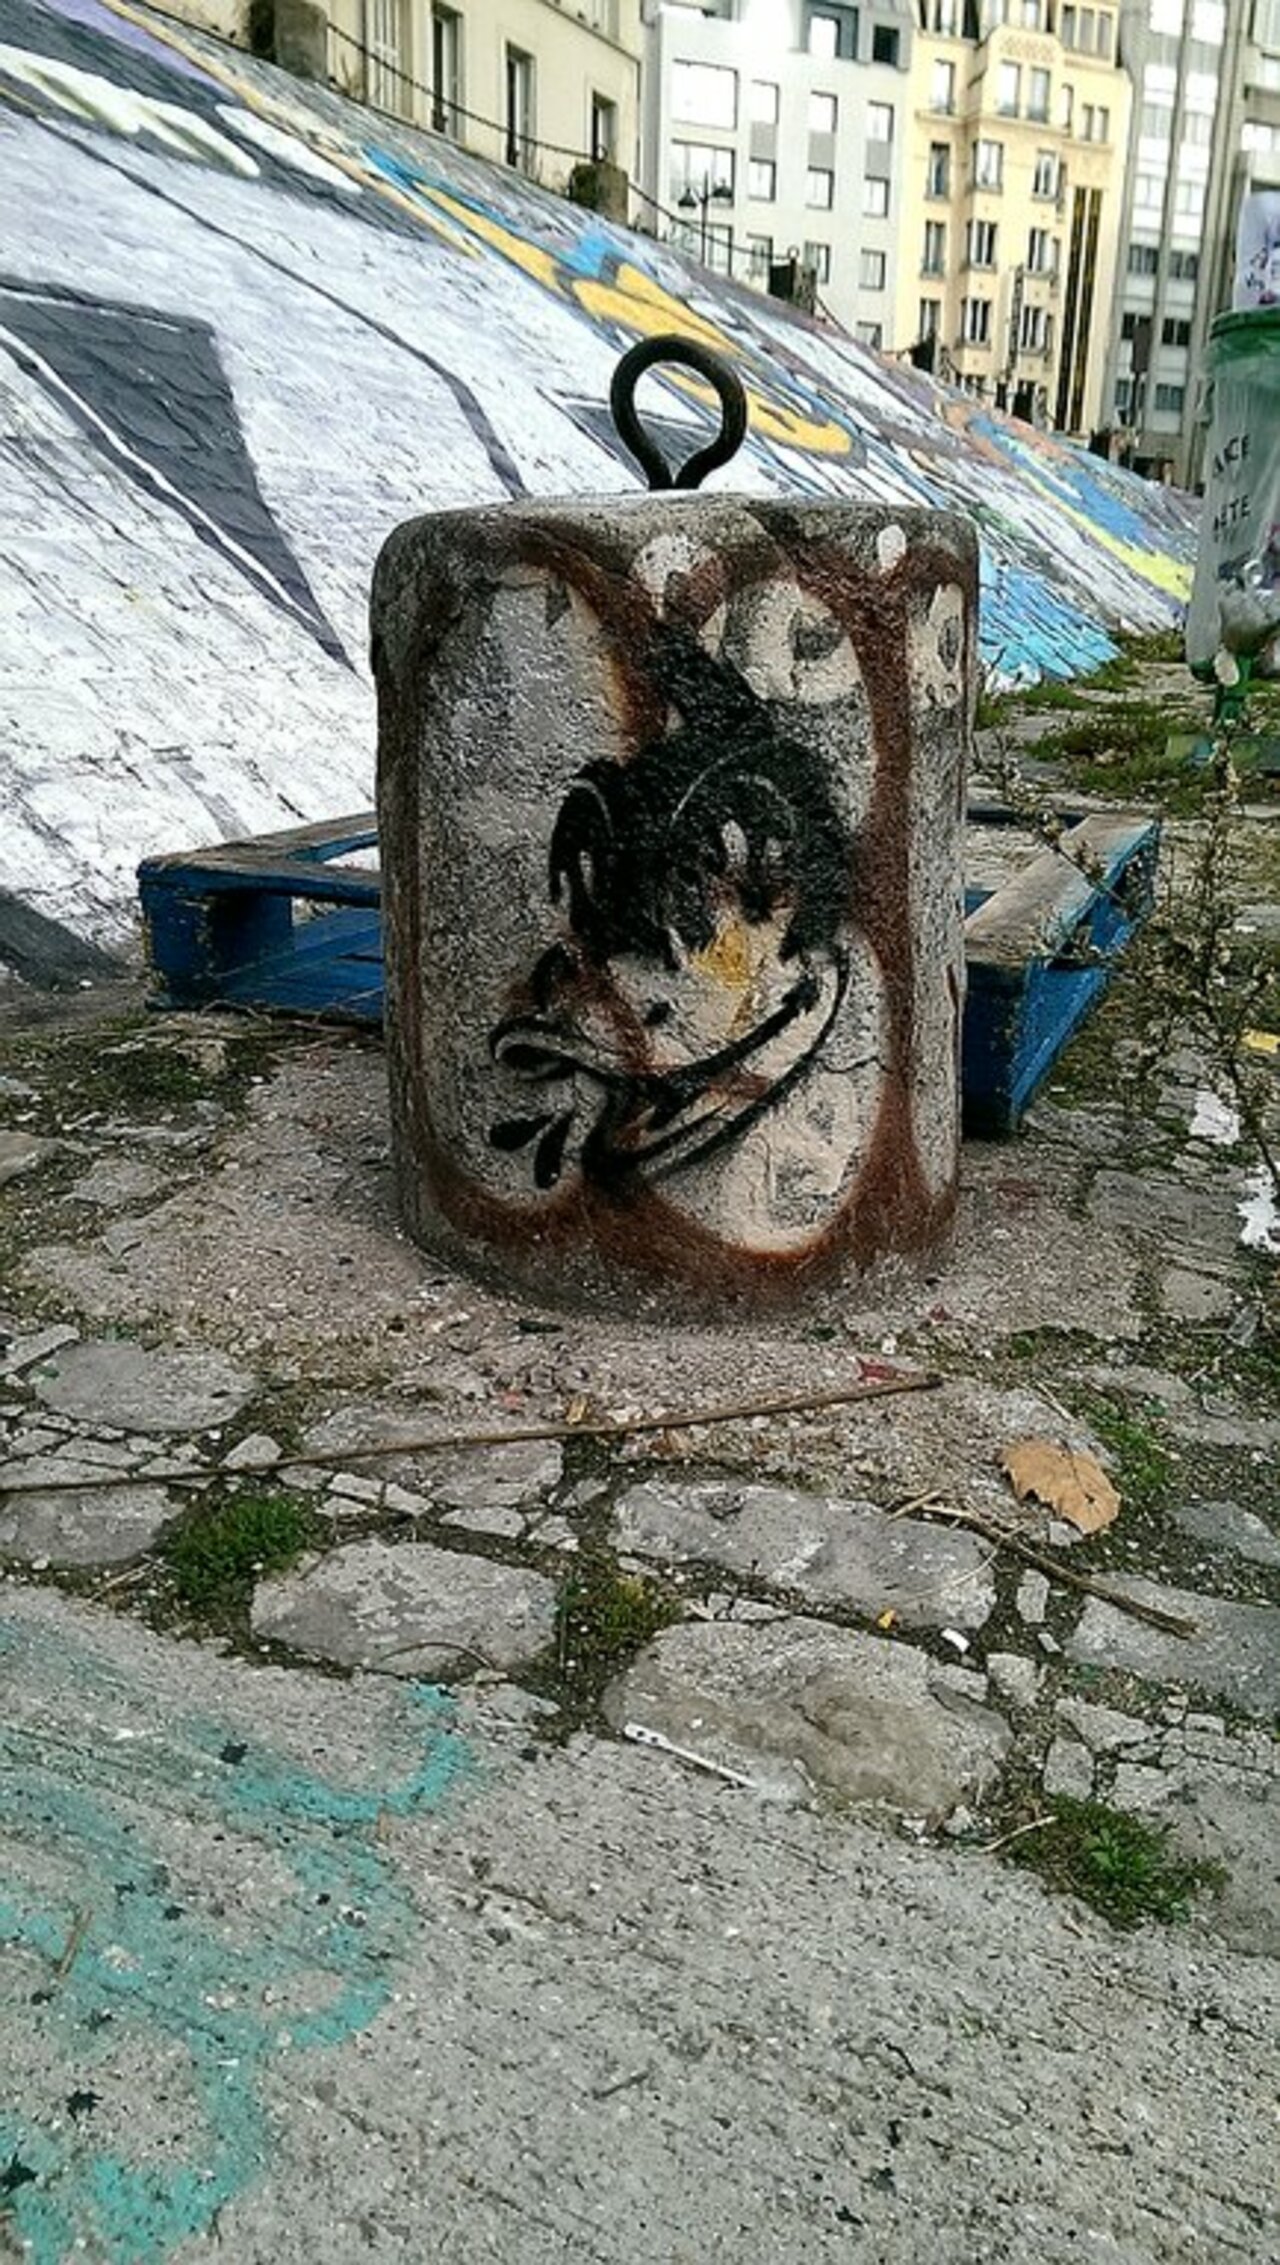 Street Art by anonymous in #Paris http://www.urbacolors.com #art #mural #graffiti #streetart https://t.co/Vtwg4VOjyB